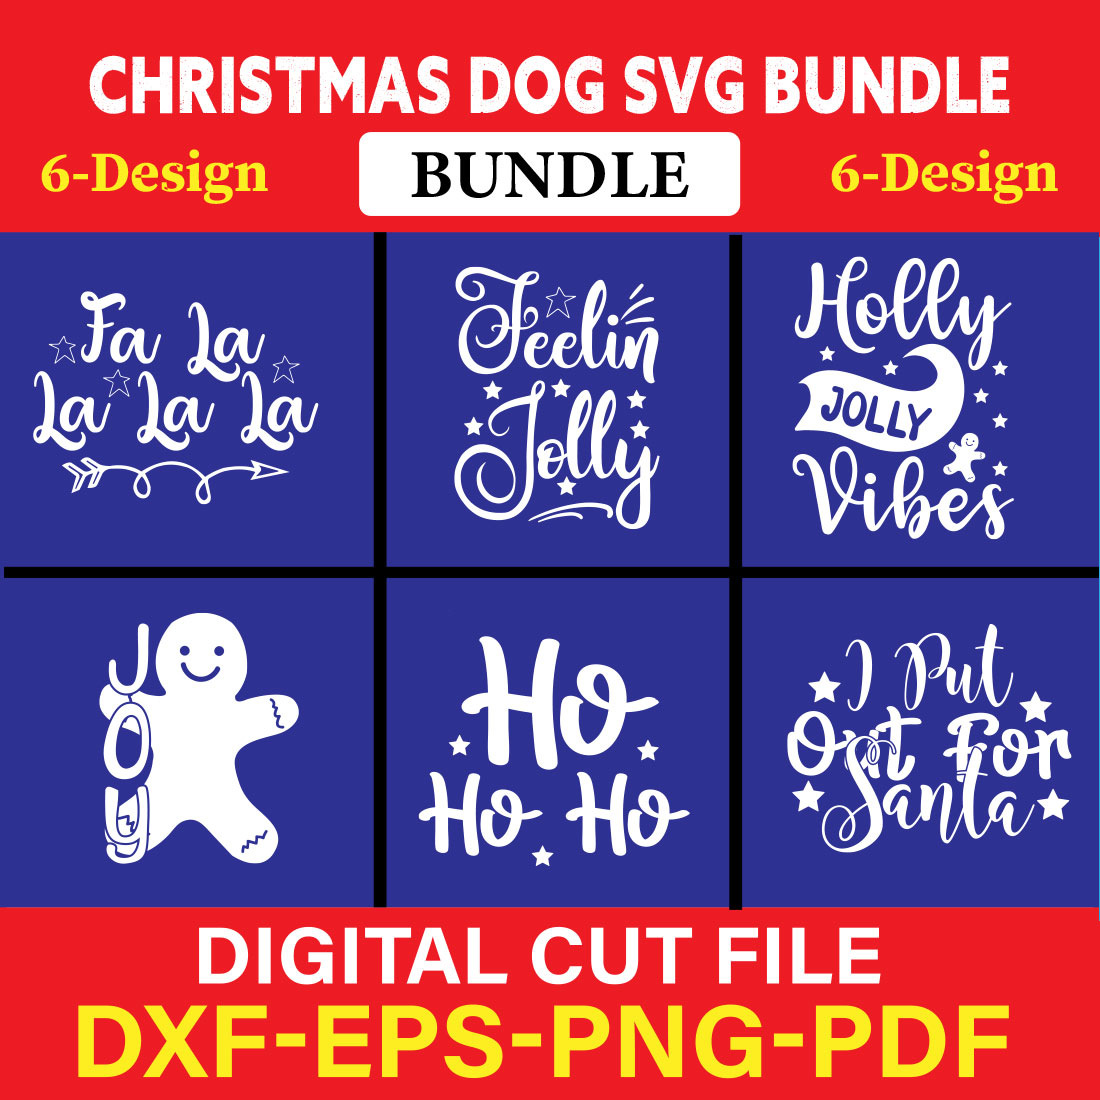 Christmas SVG Bundle / Funny Christmas SVG / Cut File vol-06 cover image.